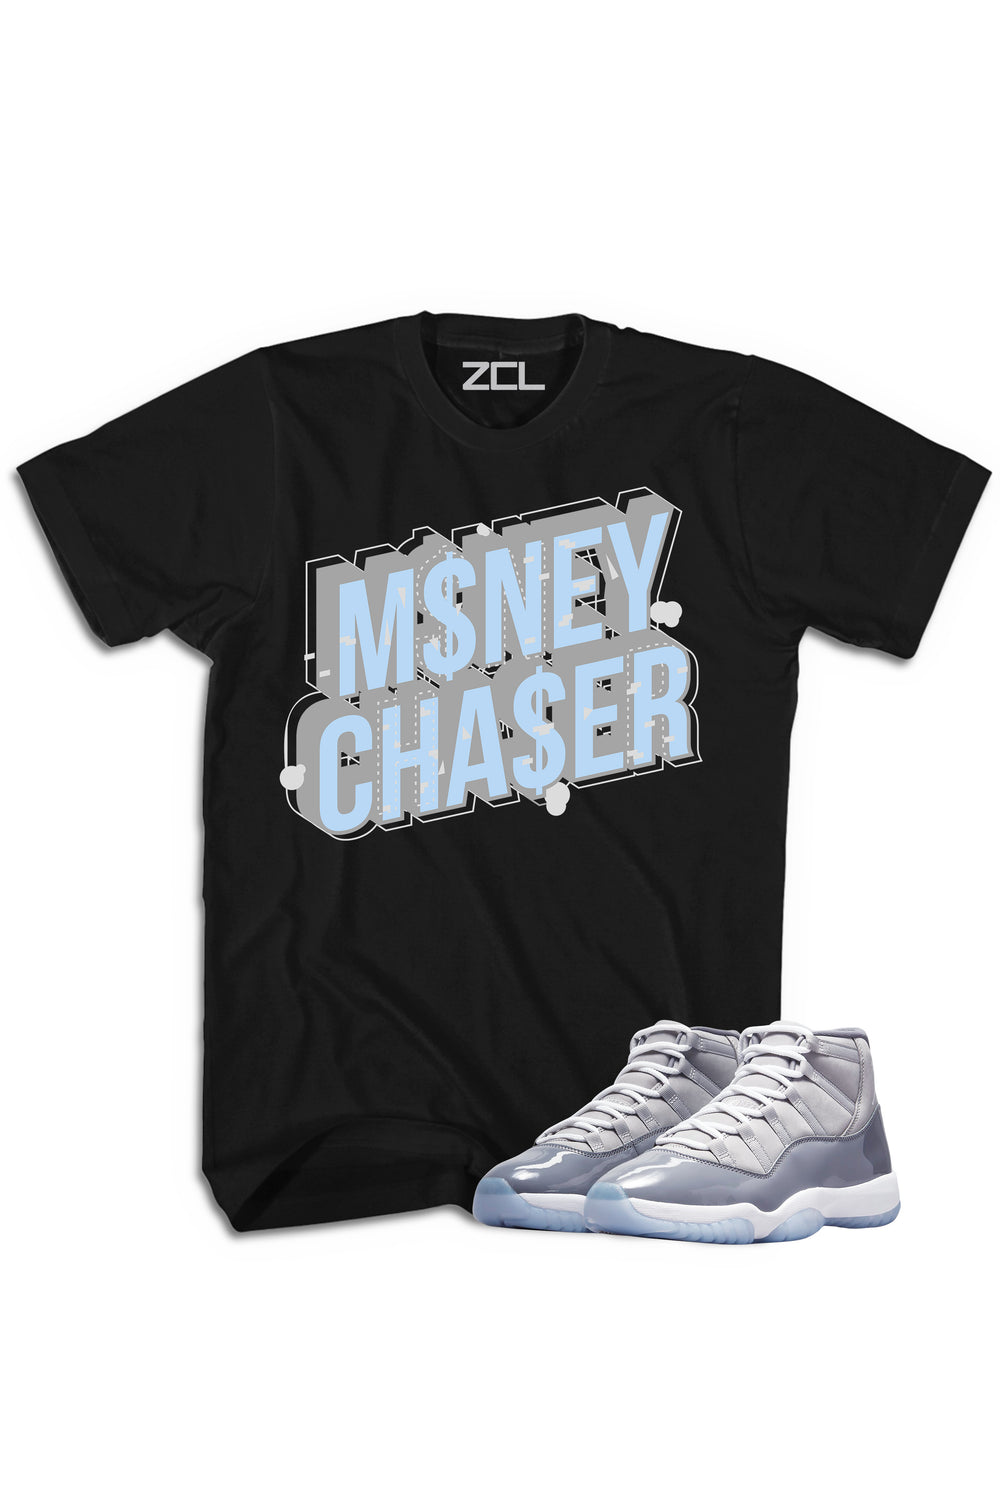 Air Jordan 11 "Money Chaser" Tee Cool Grey - Zamage